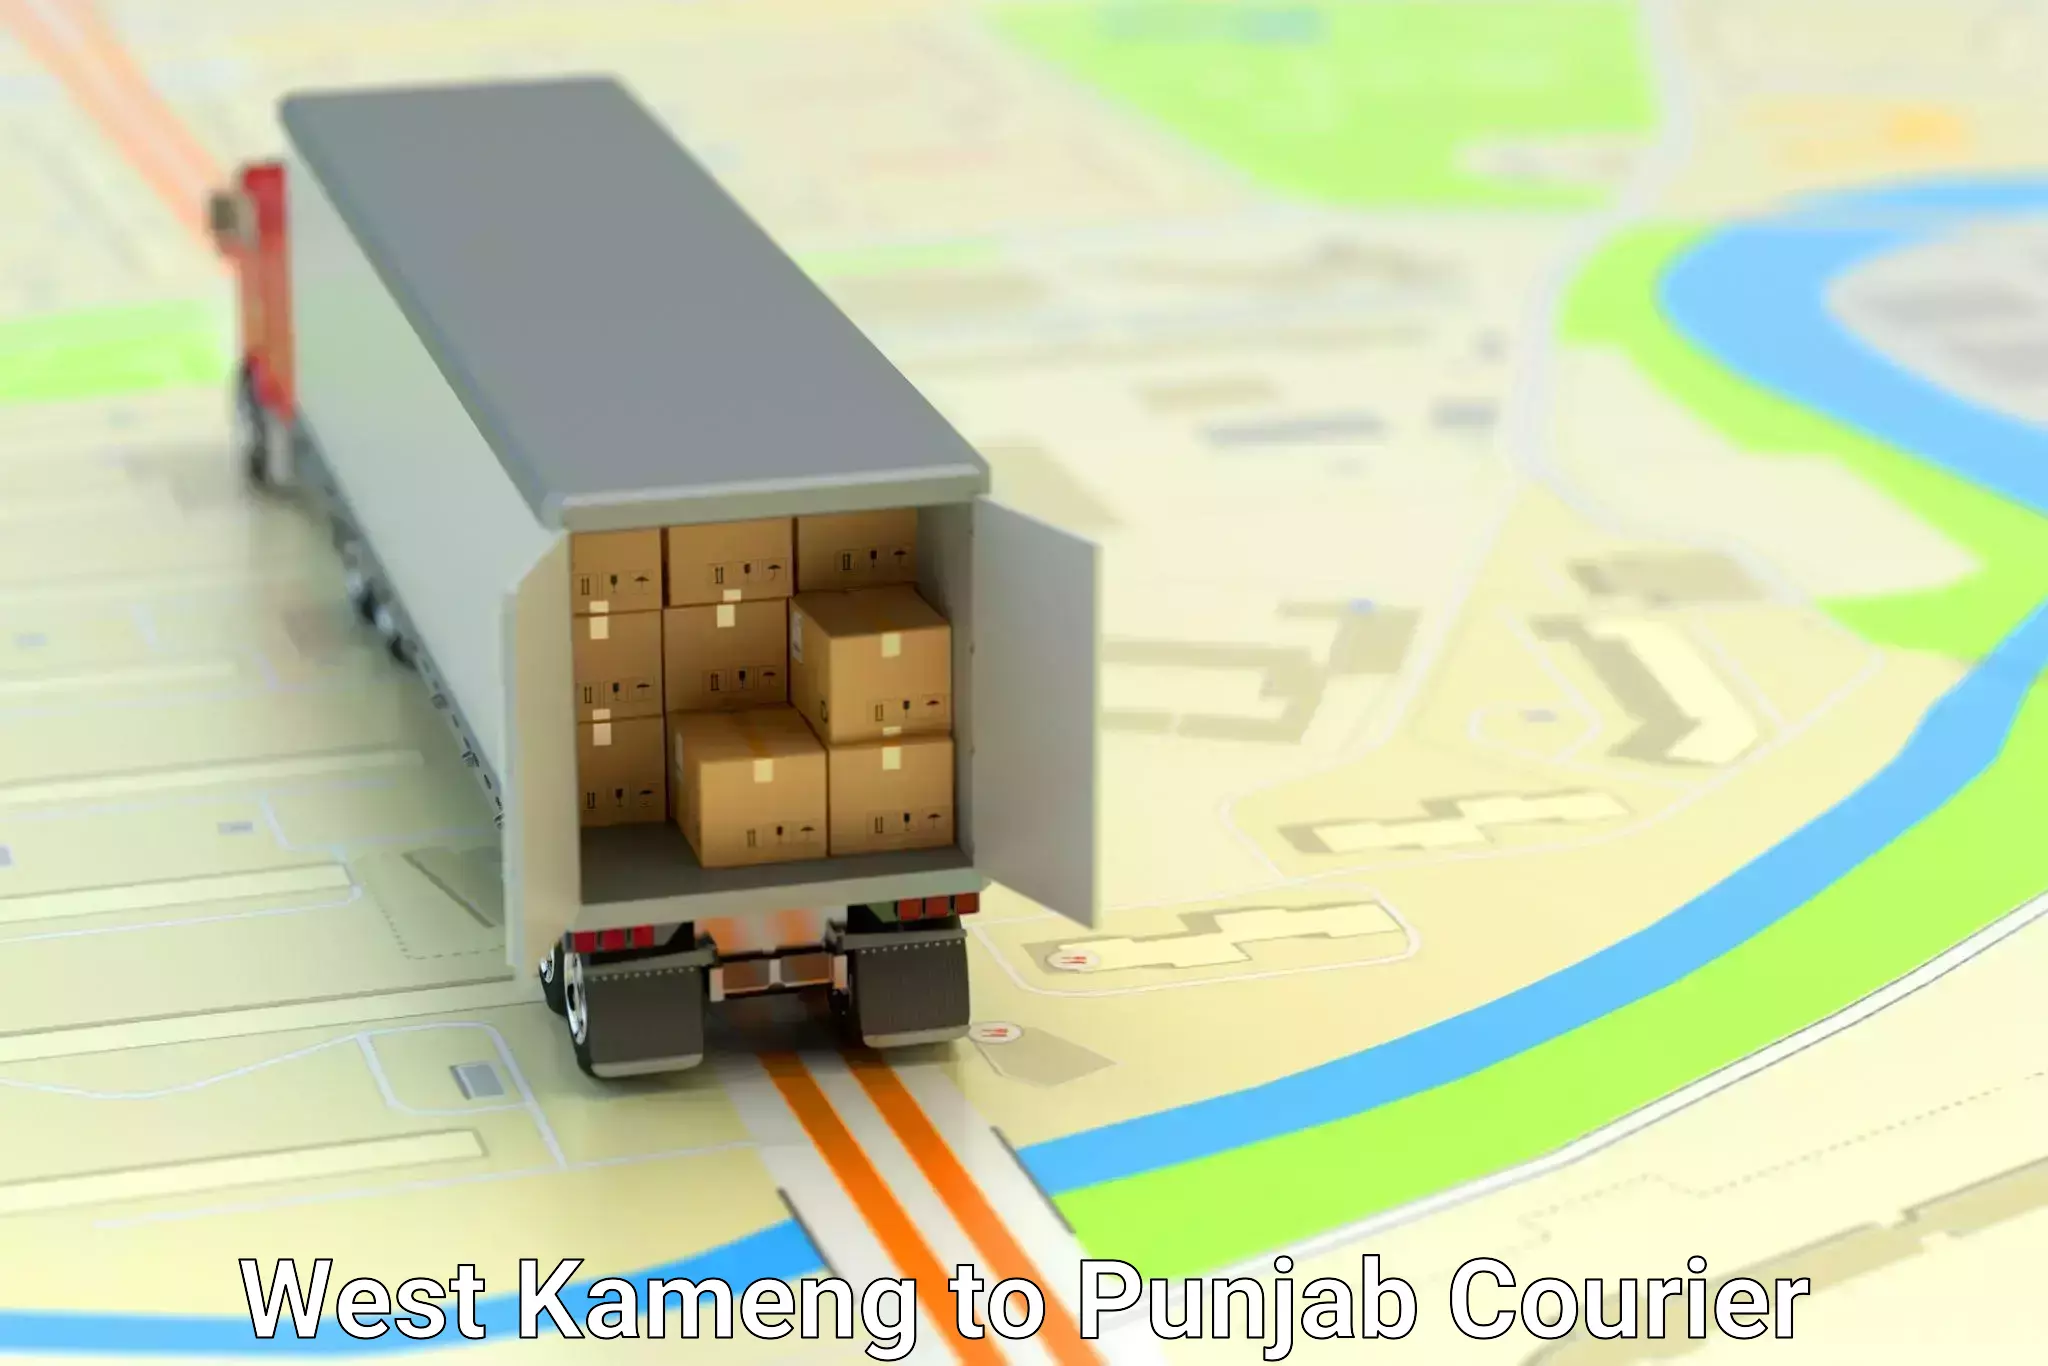 Cash on delivery service West Kameng to Punjab